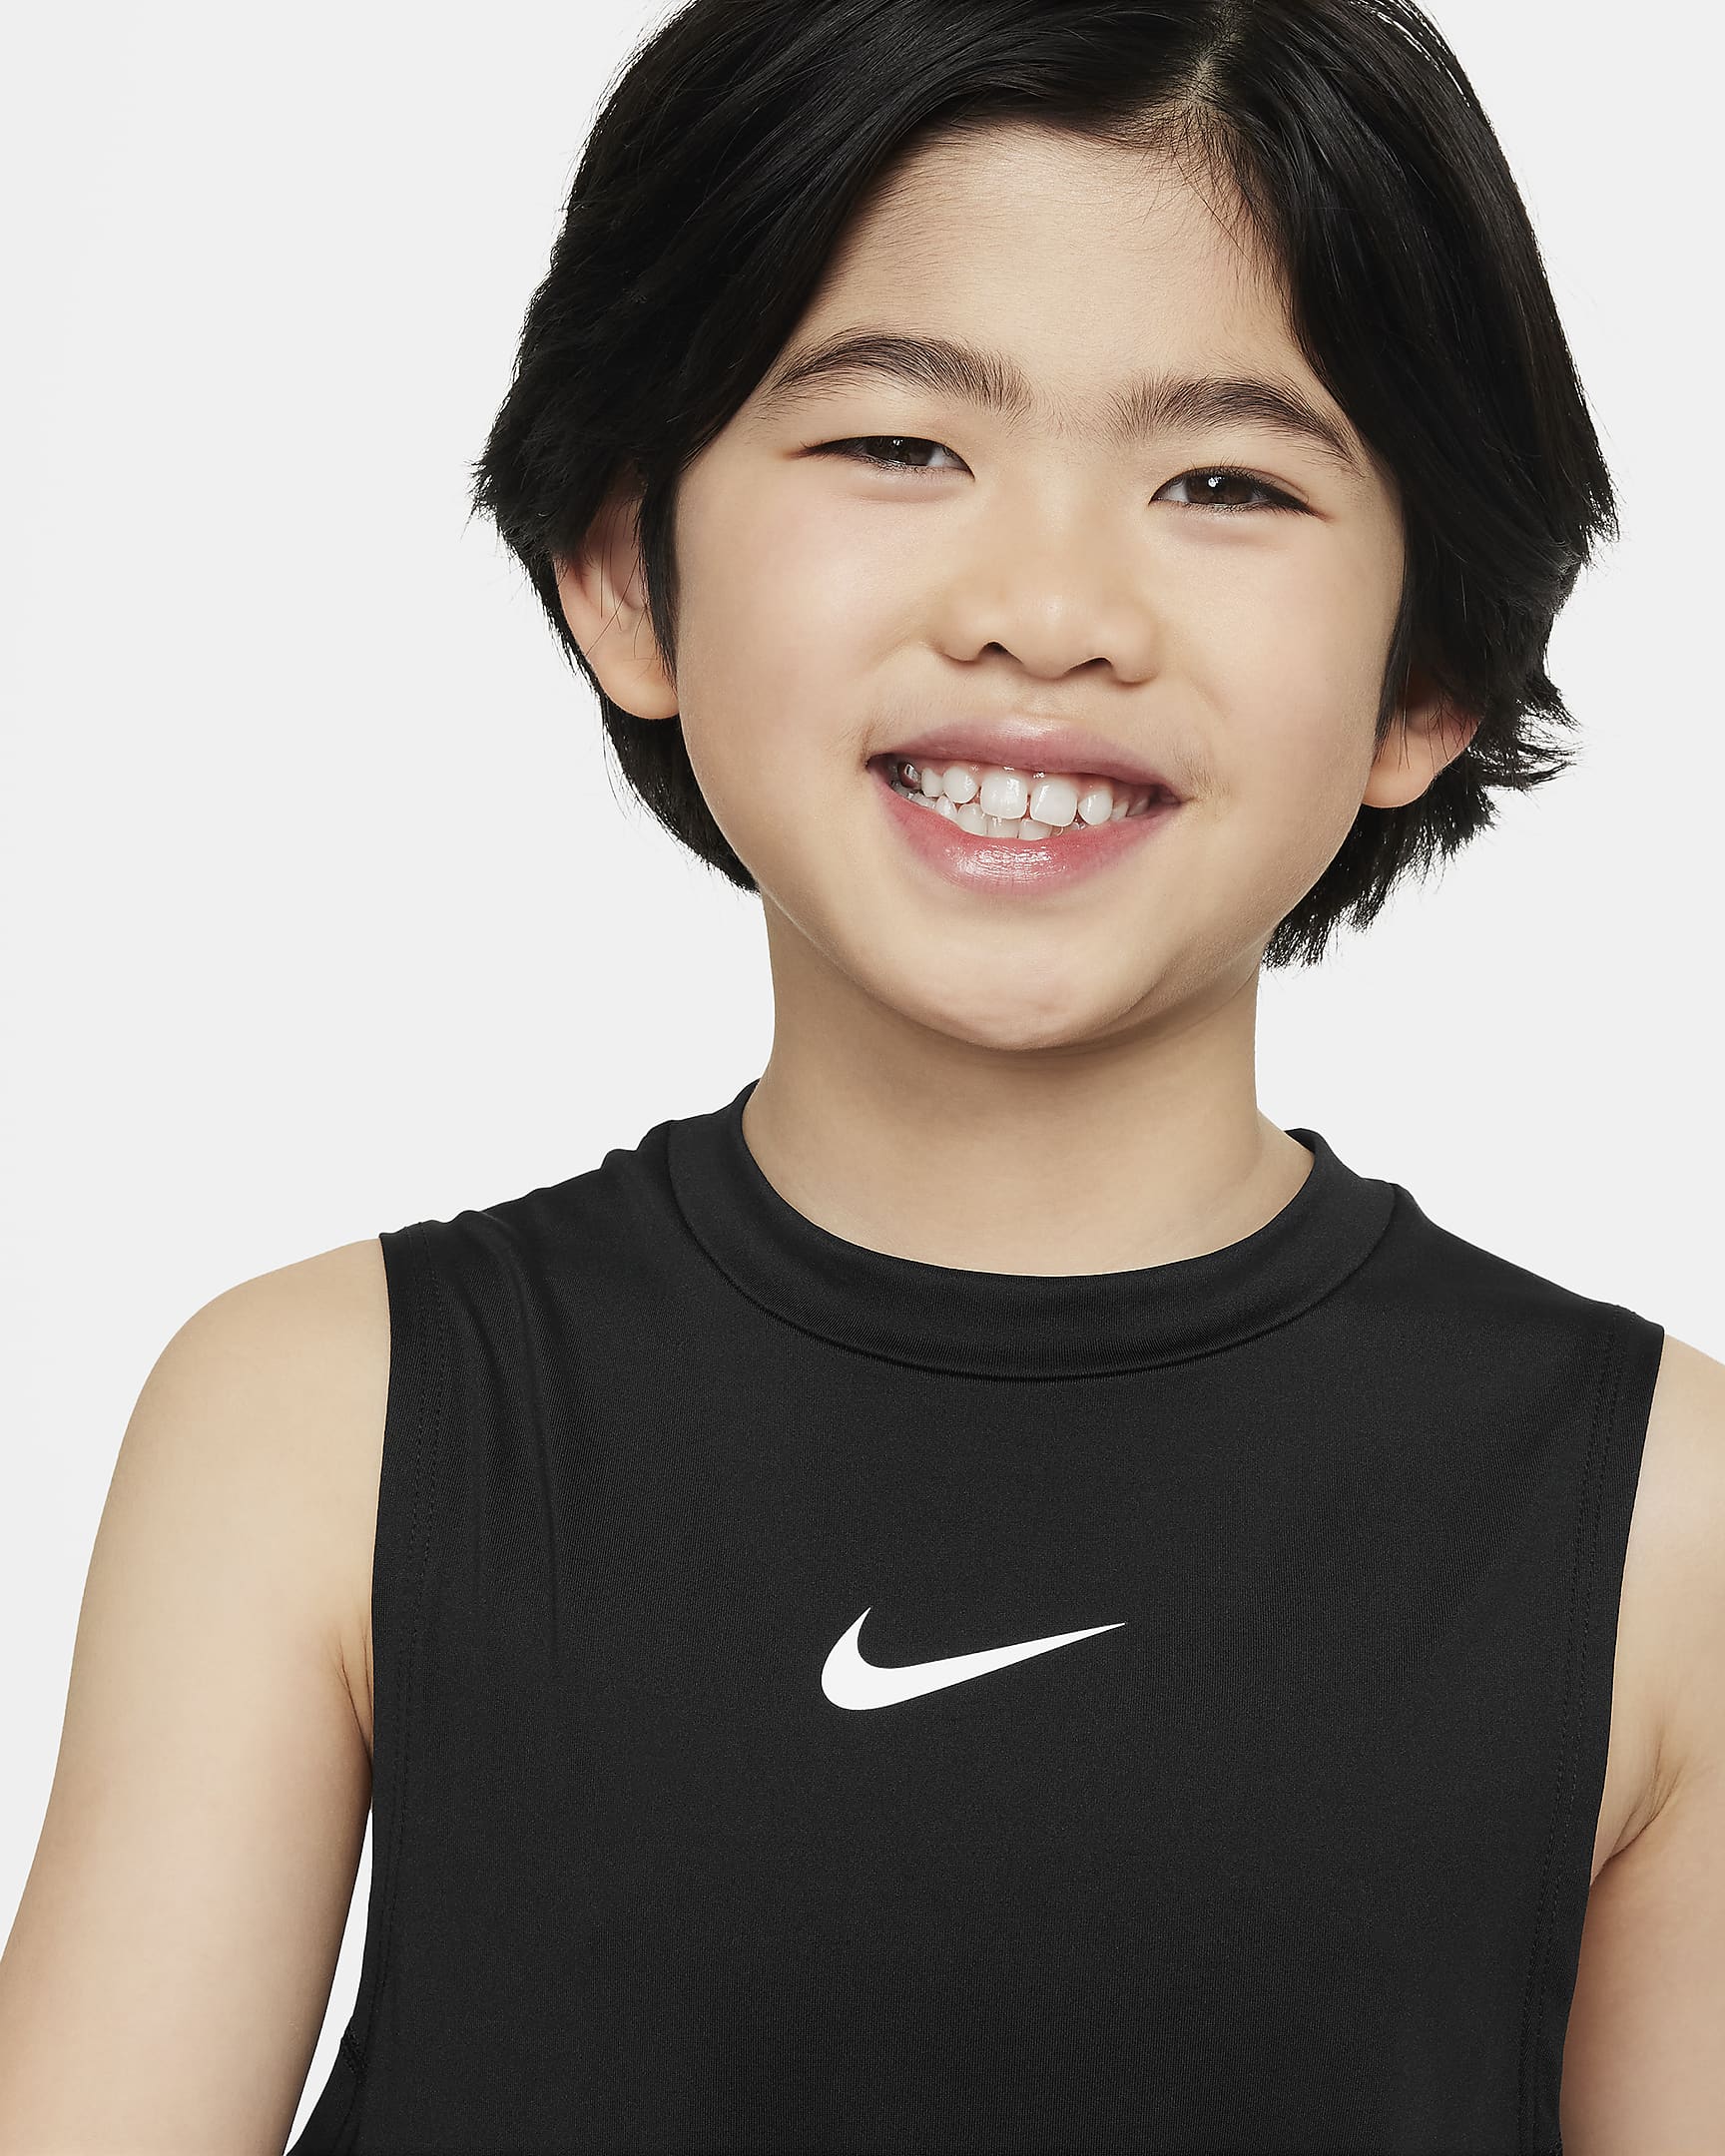 Nike Pro Older Kids' (Boys') Sleeveless Top. Nike FI